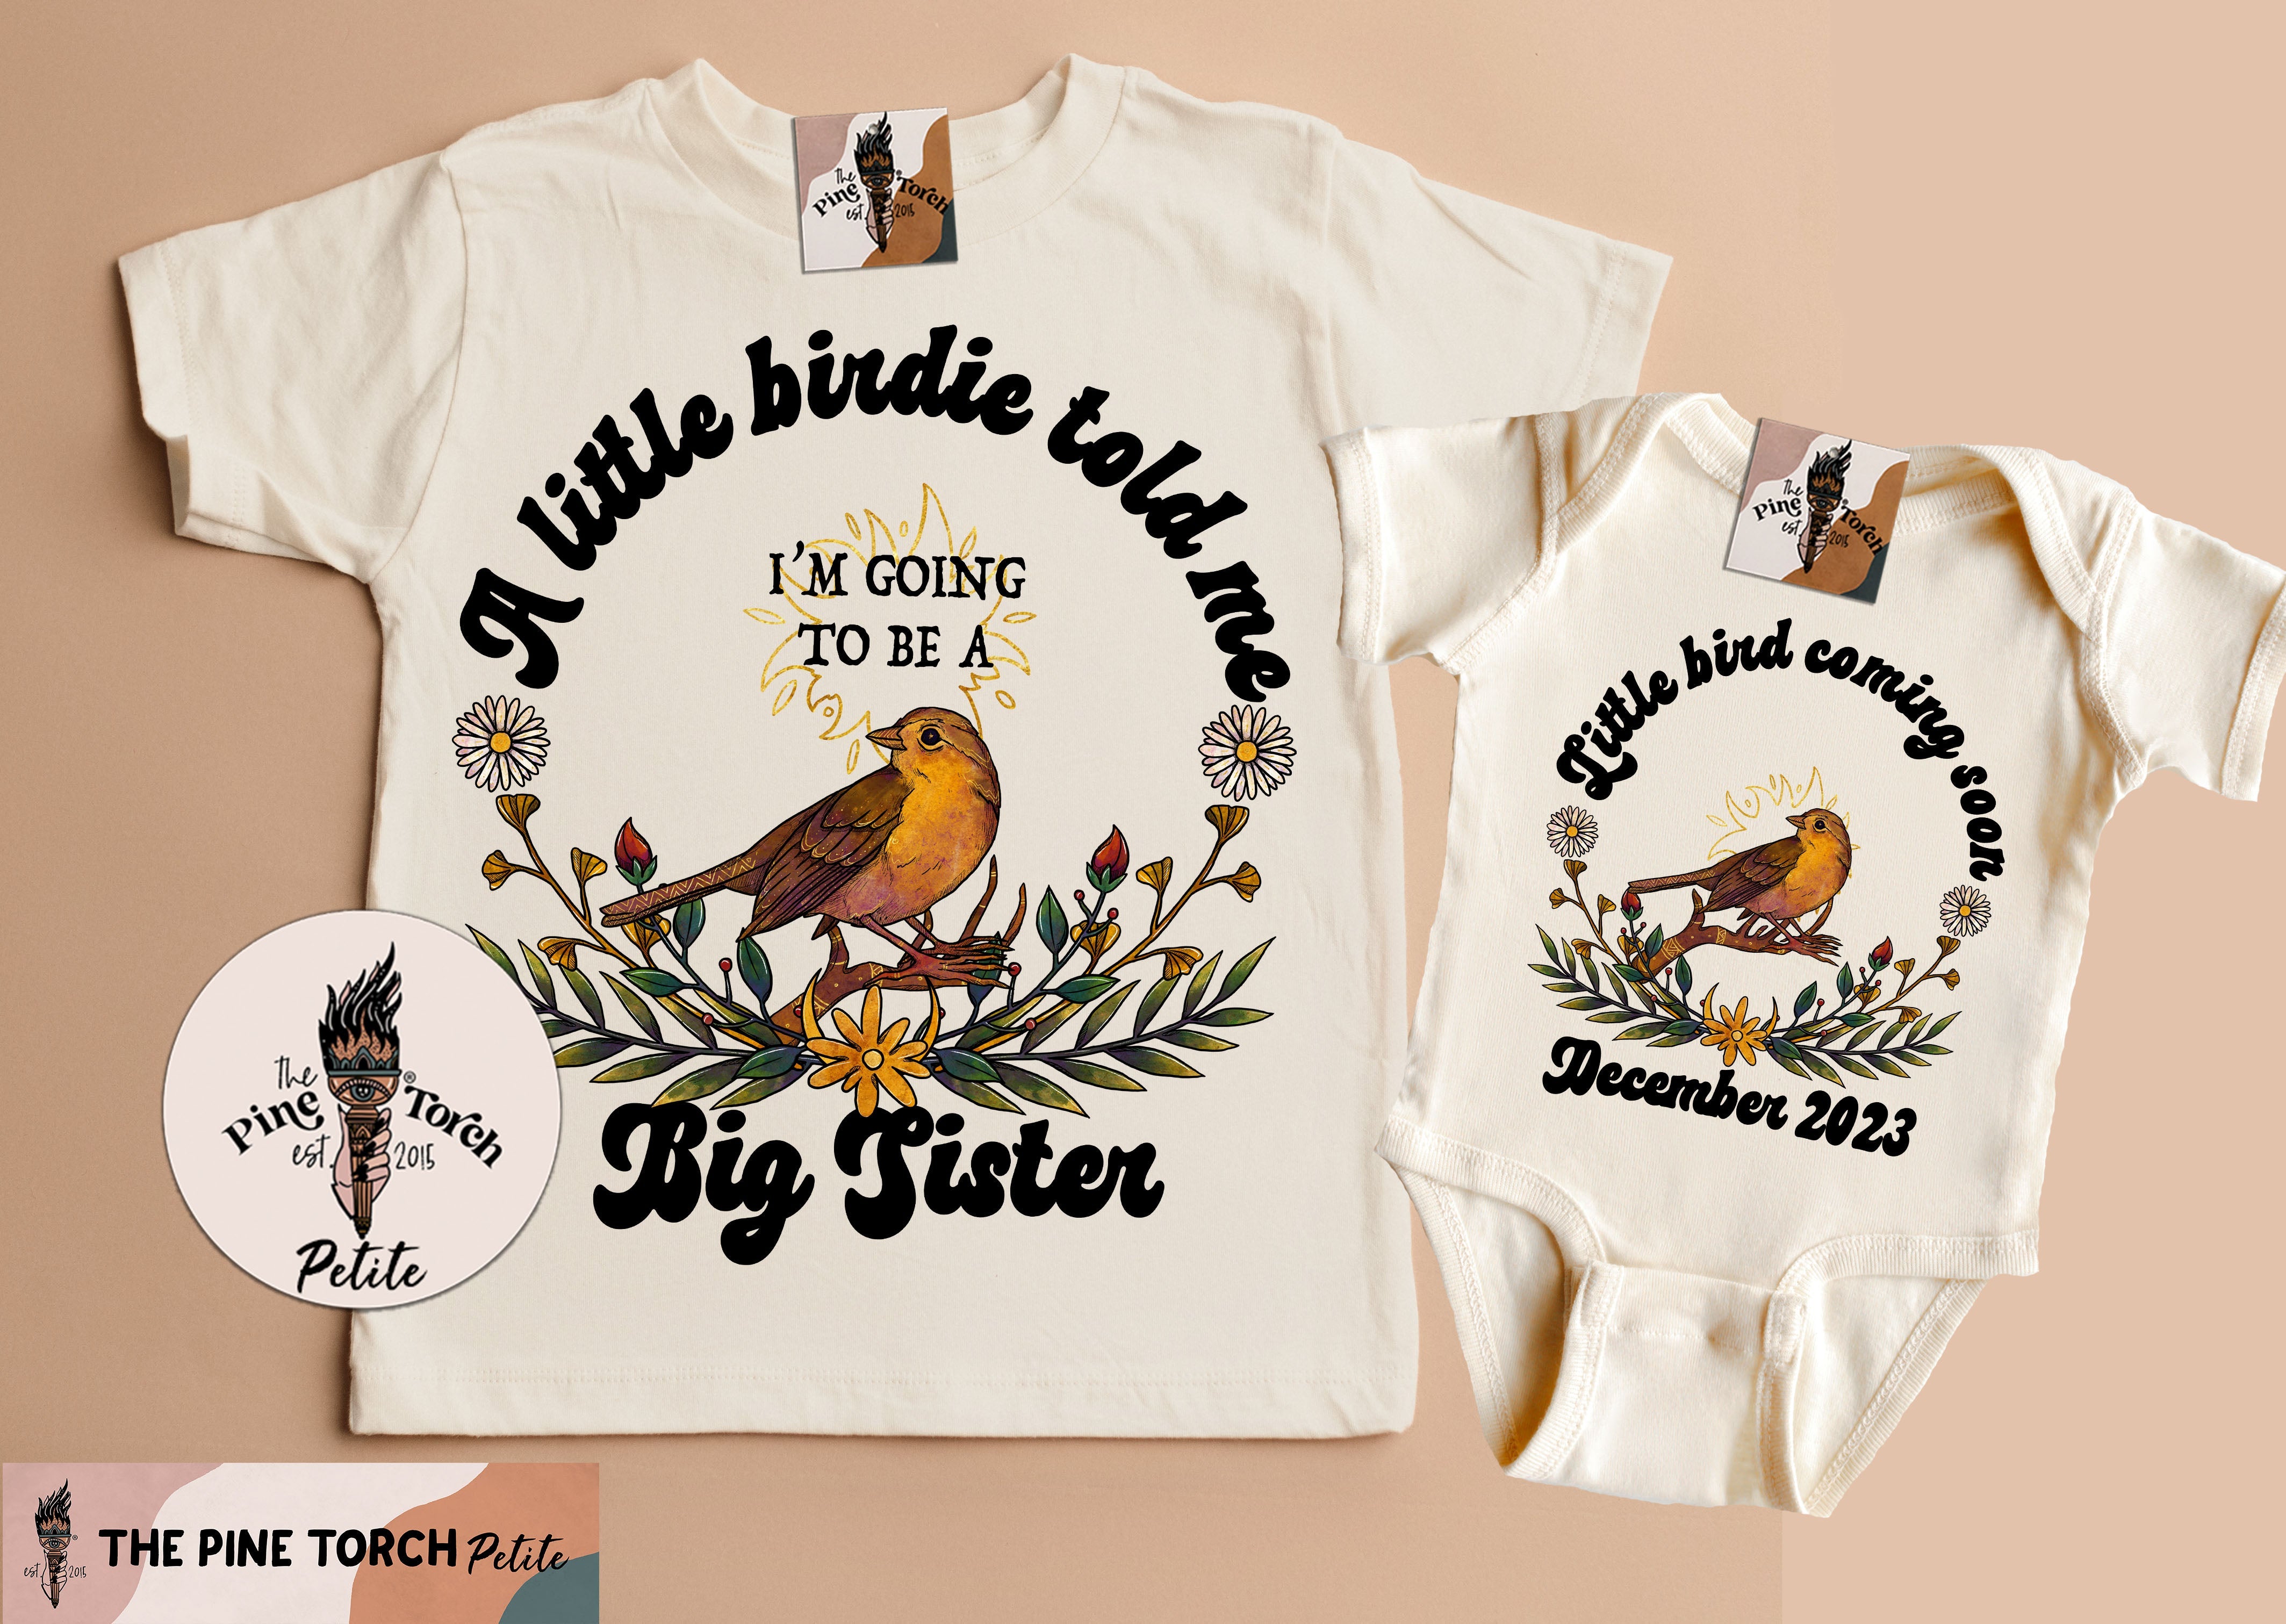 « A LITTLE BIRDIE TOLD ME: BIG BROTHER BIRD » KID'S TEE